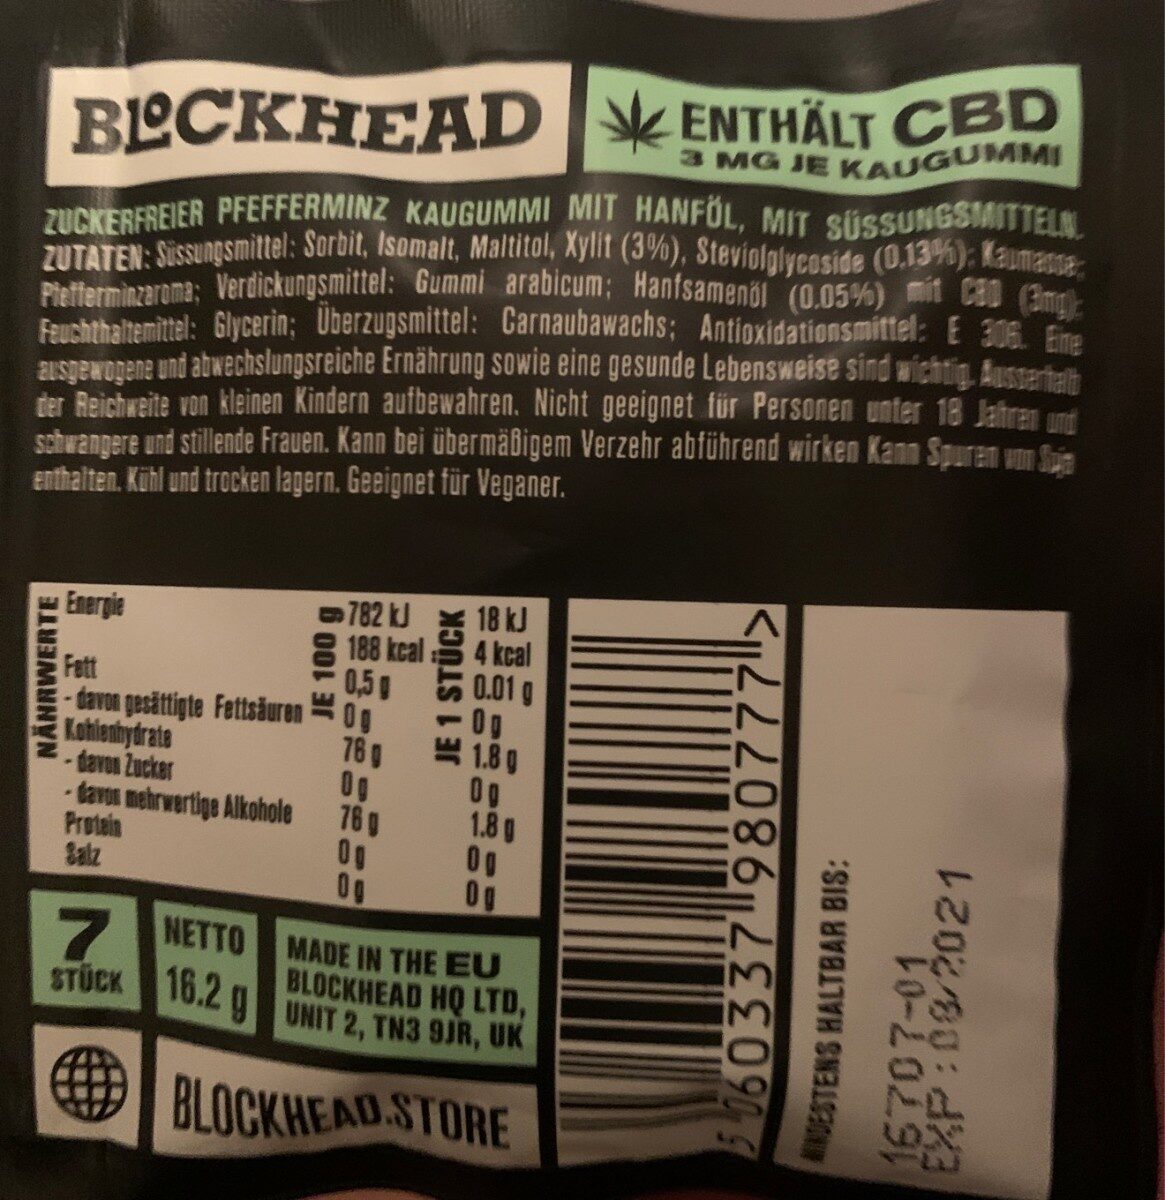 Blockhead cbd - Tableau nutritionnel